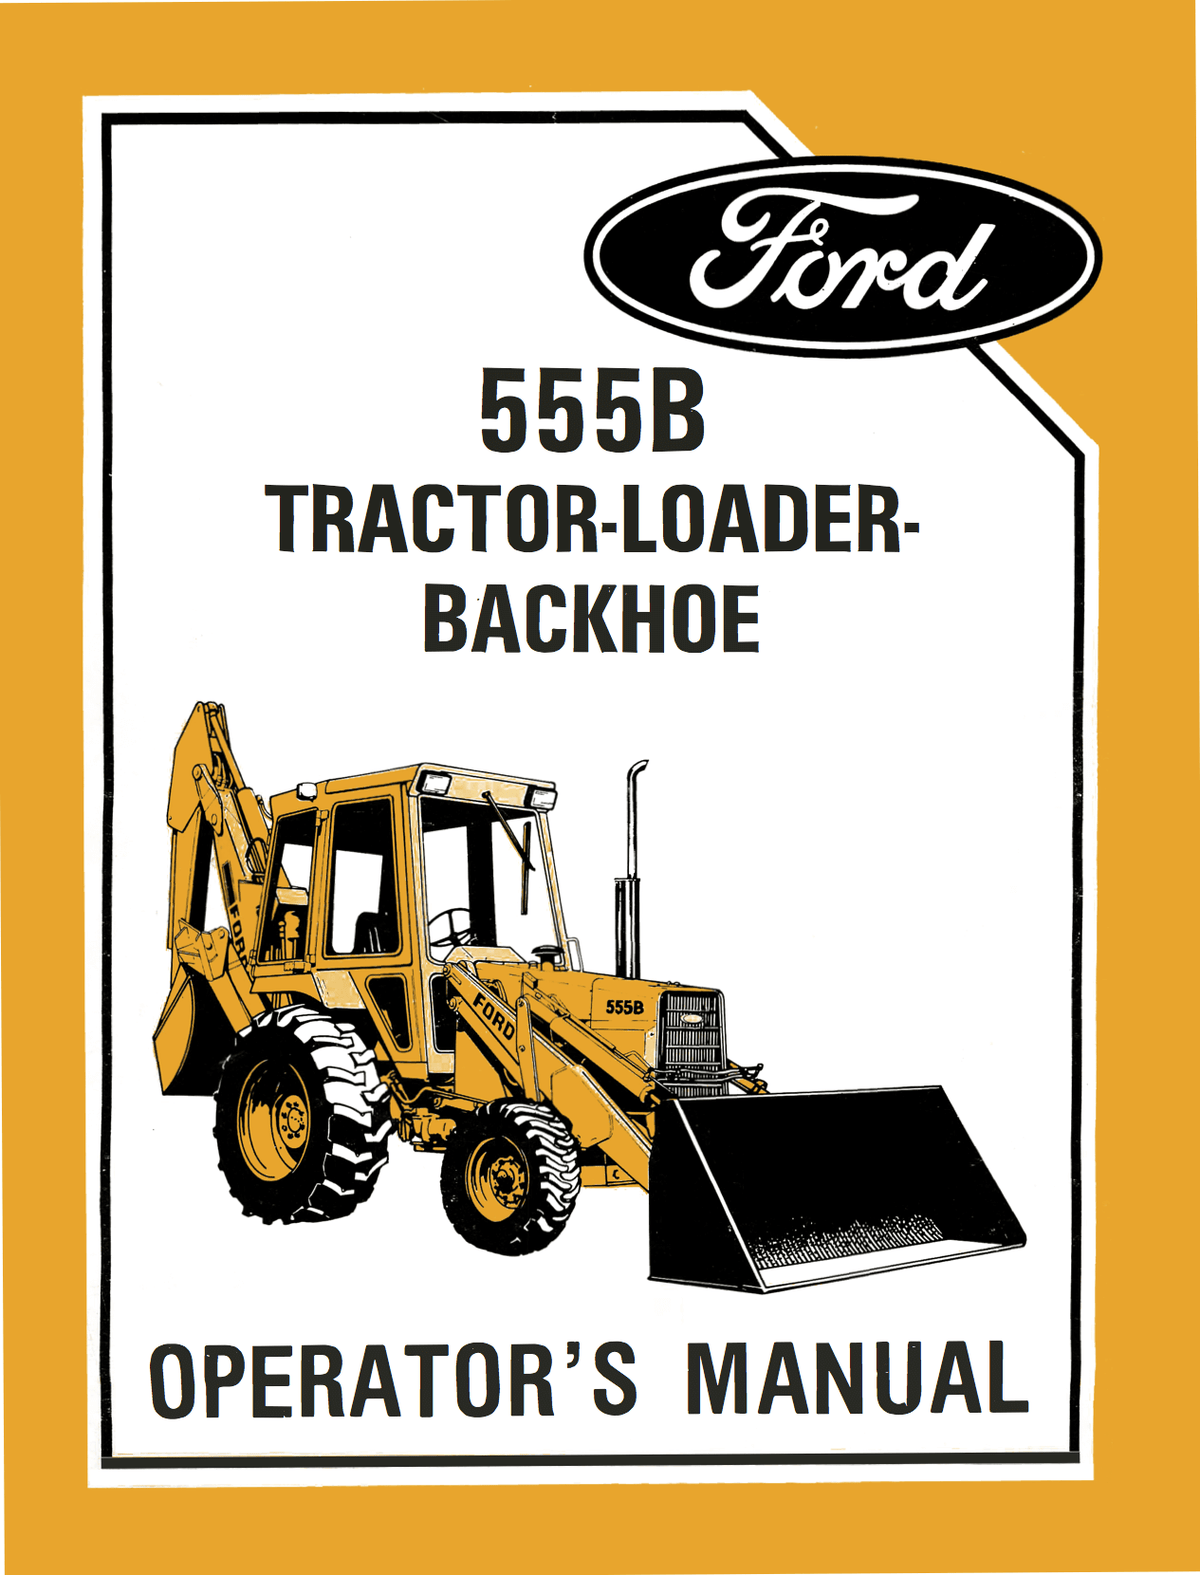 Ford 555B Tractor-Loader-Backhoe - Operator's Manual - Ag Manuals - A Provider of Digital Farm Manuals - 1